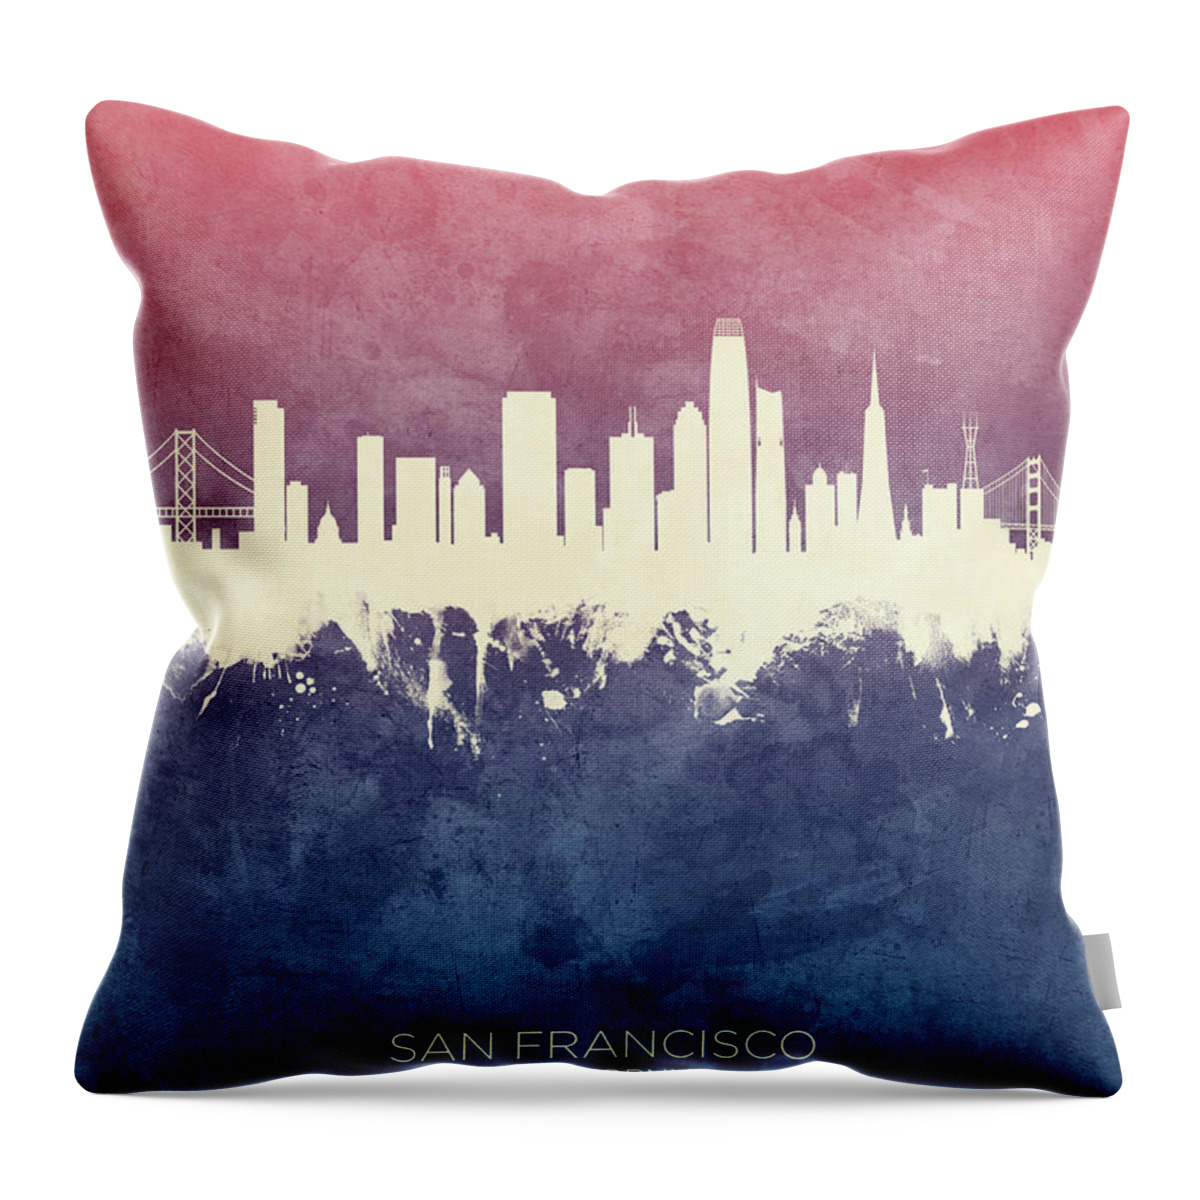 San Francisco Throw Pillow featuring the digital art San Francisco California Skyline #12 by Michael Tompsett